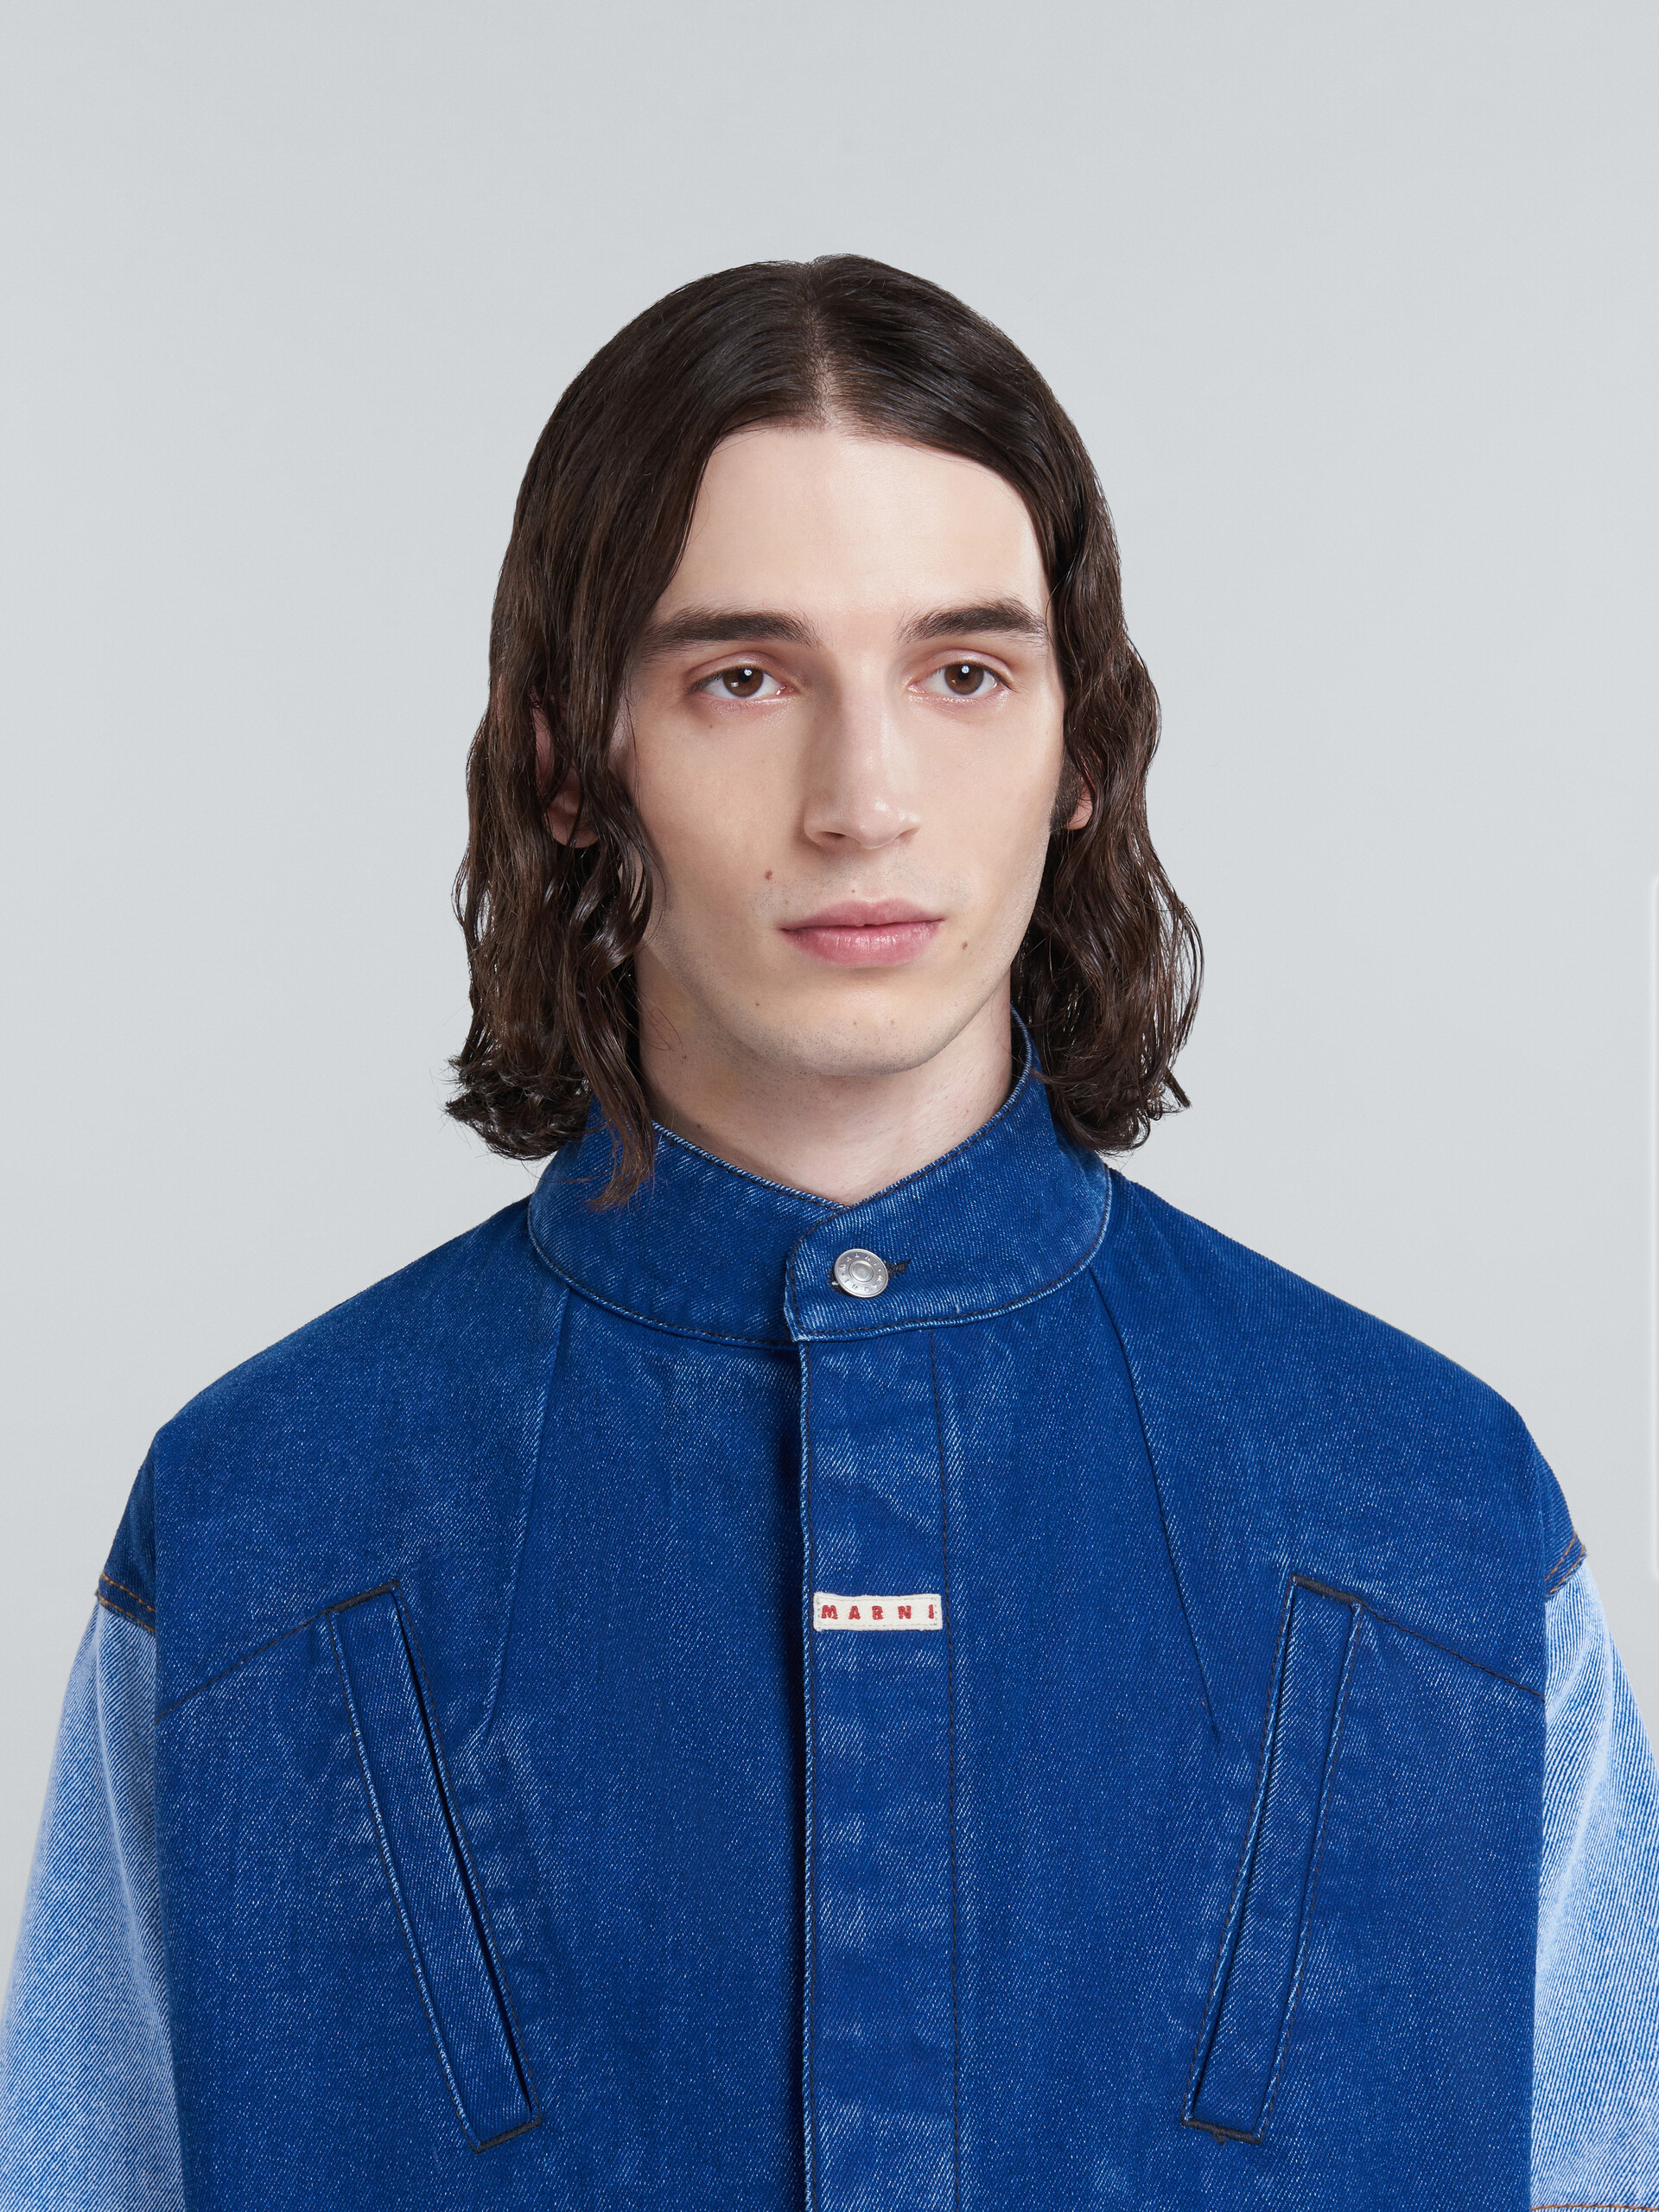 Beschichtete, blaue Jeansjacke - Jacken - Image 4